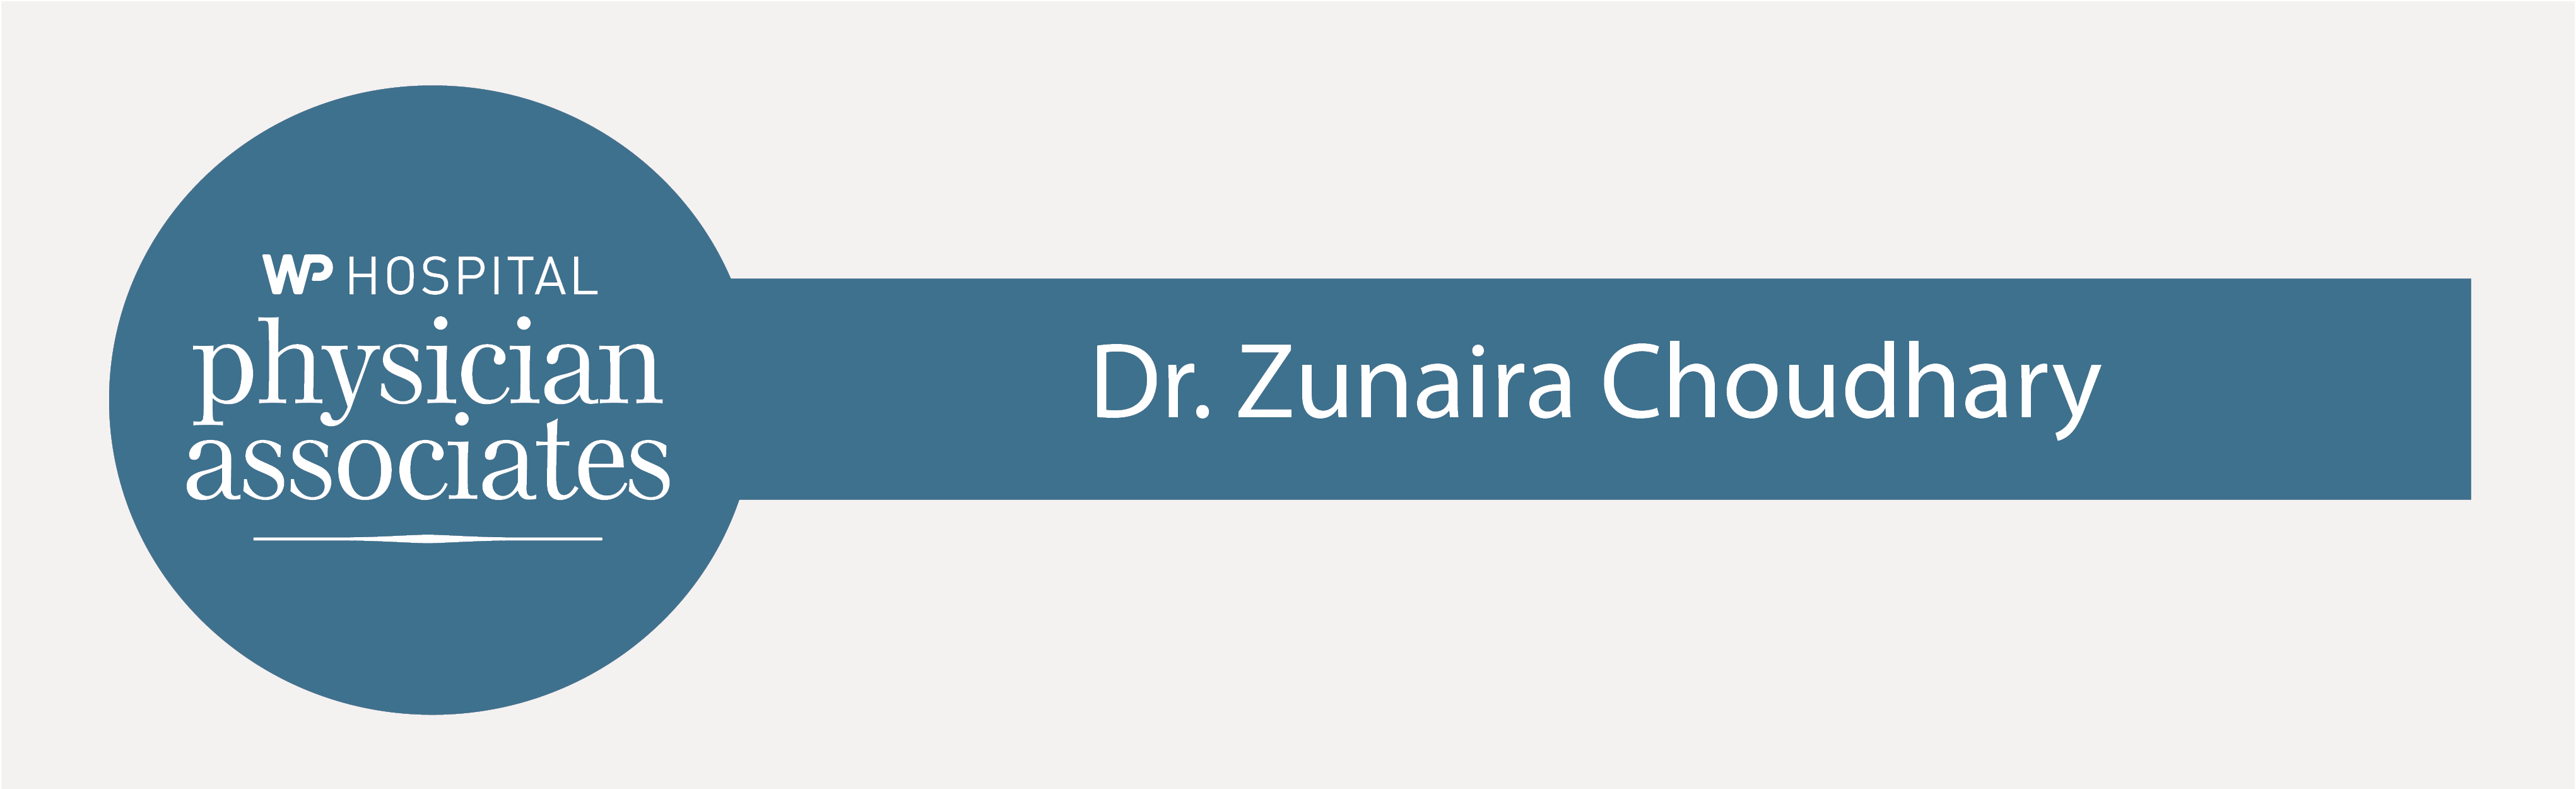 Dr. Zunaira Choudhary Joins White Plains Hospital Center for Cancer Care